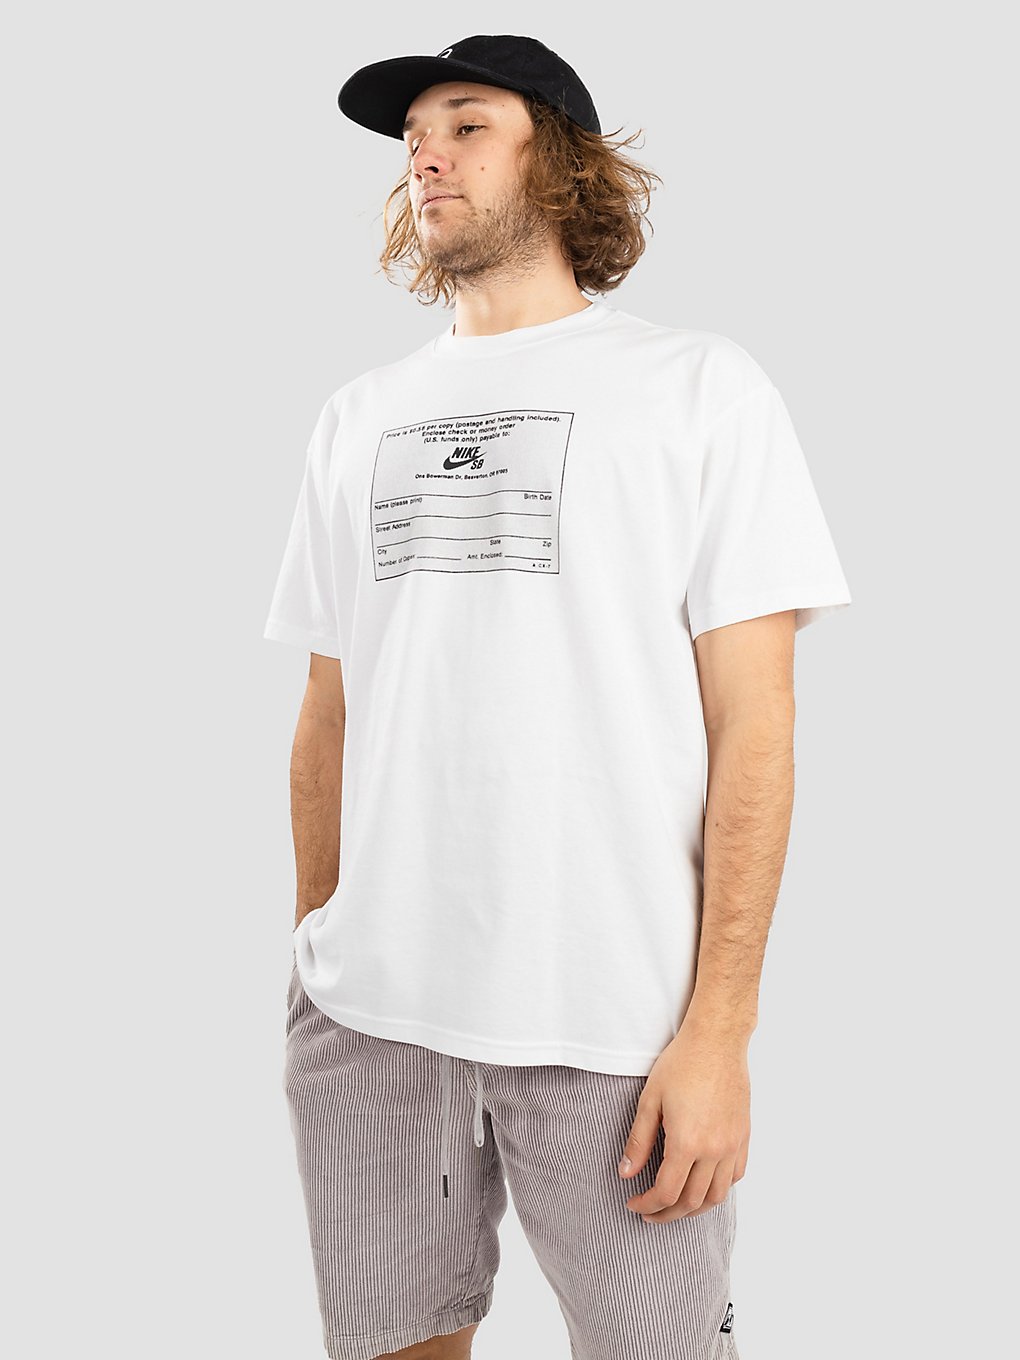 Nike SB Magcard T-Shirt white kaufen